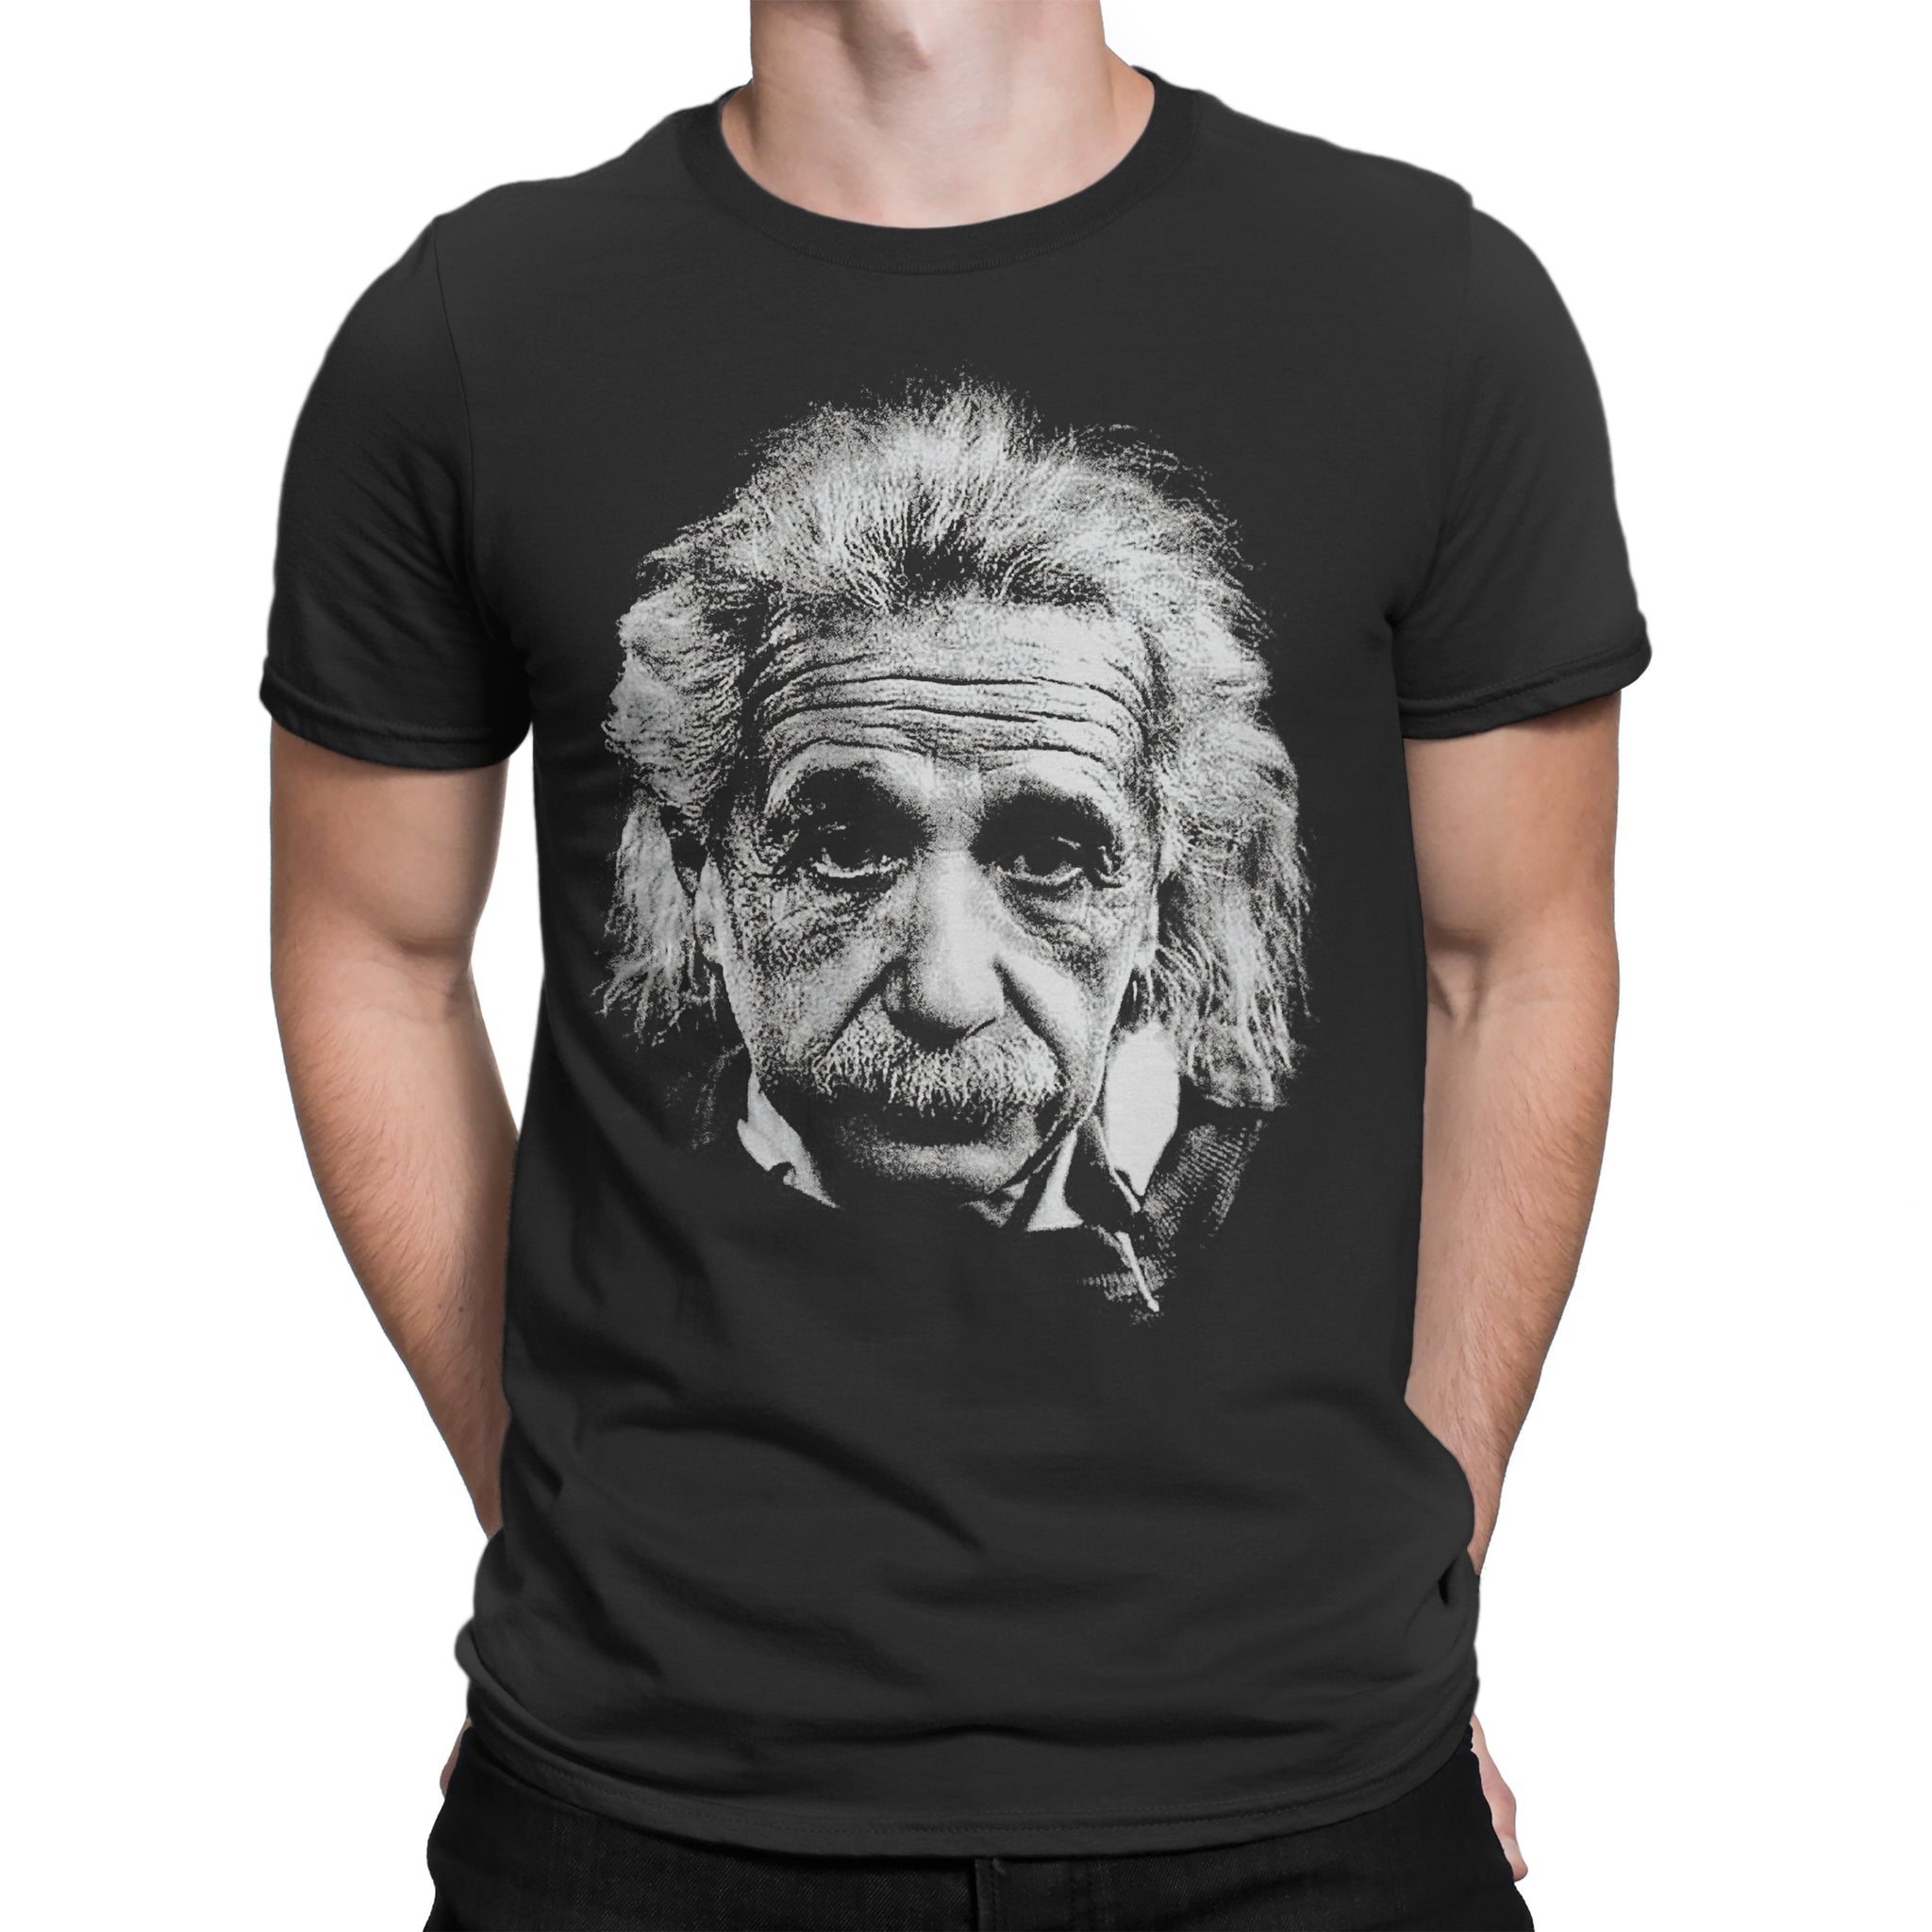 Albert Einstein "Headshot" Tee